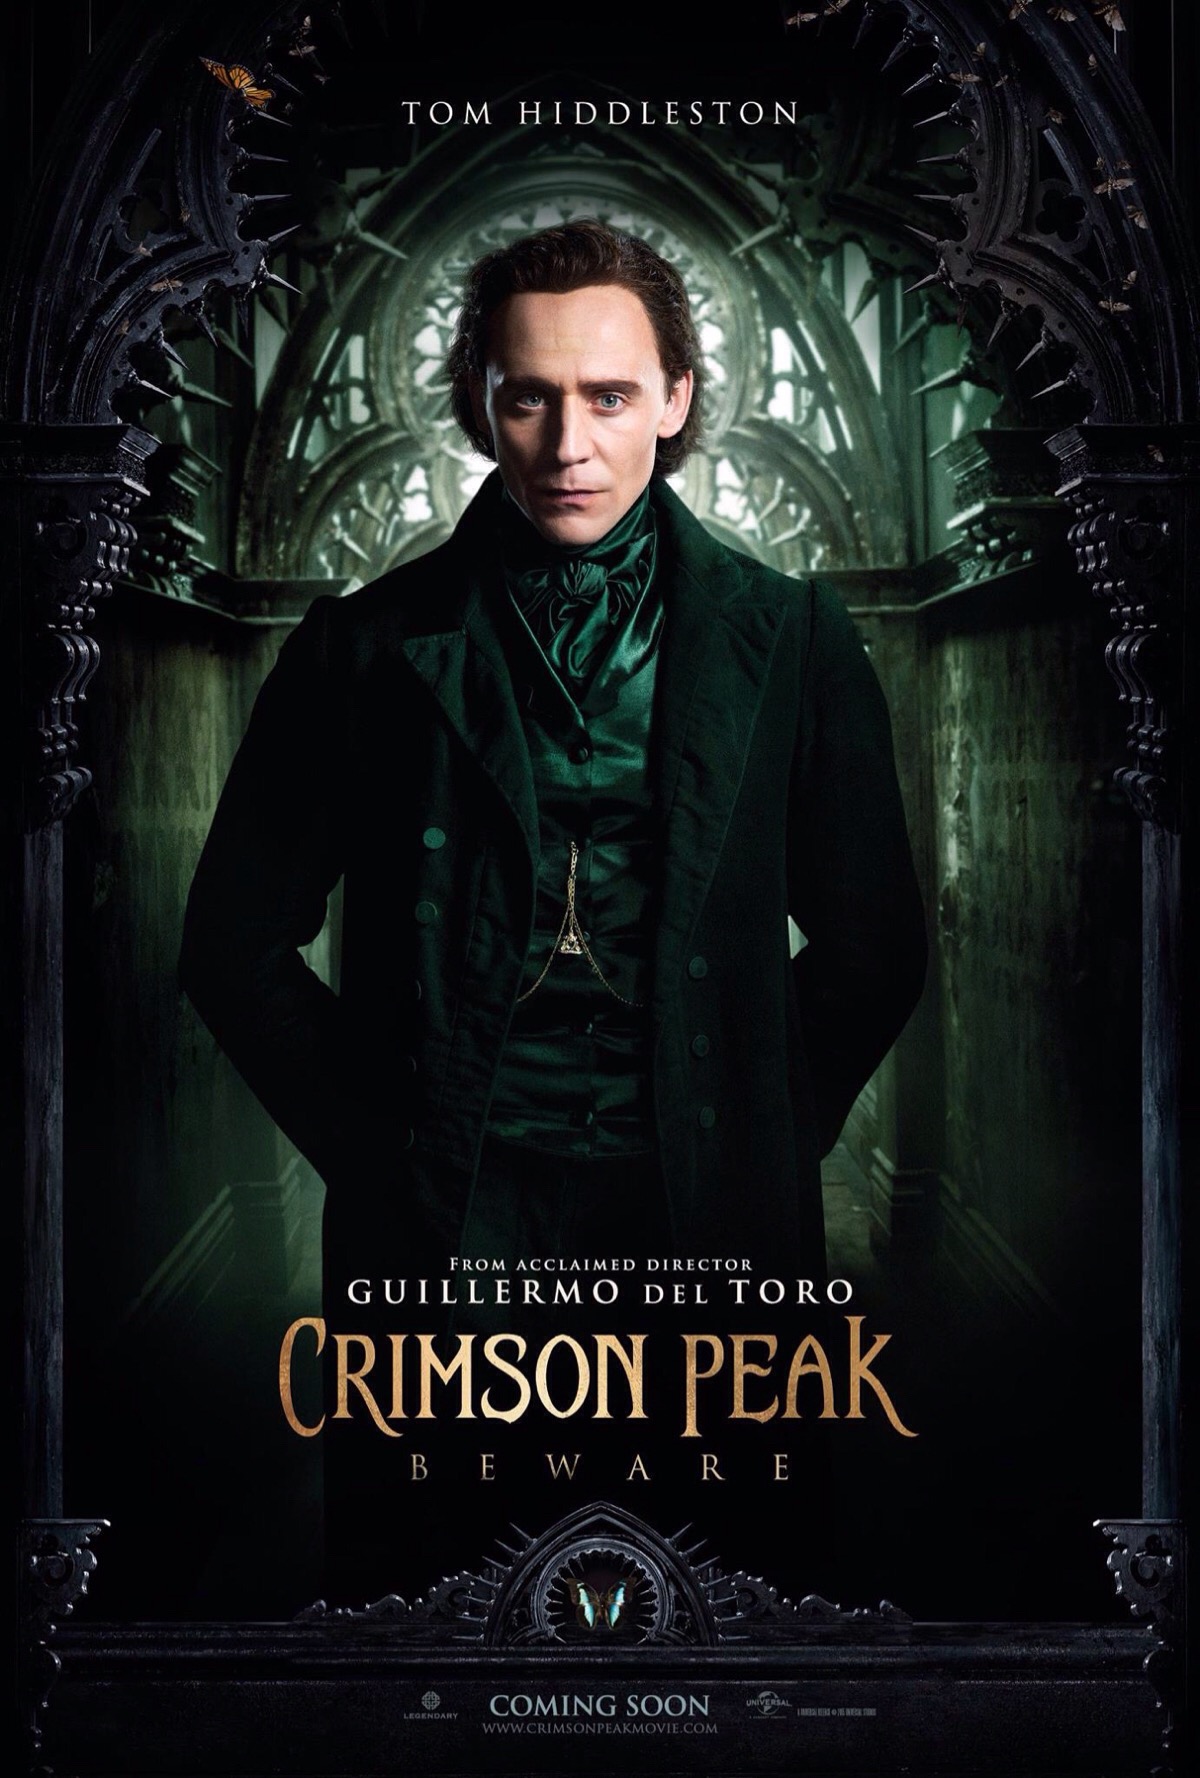 tom hiddleston 猩红山峰crimson peak 角色海报